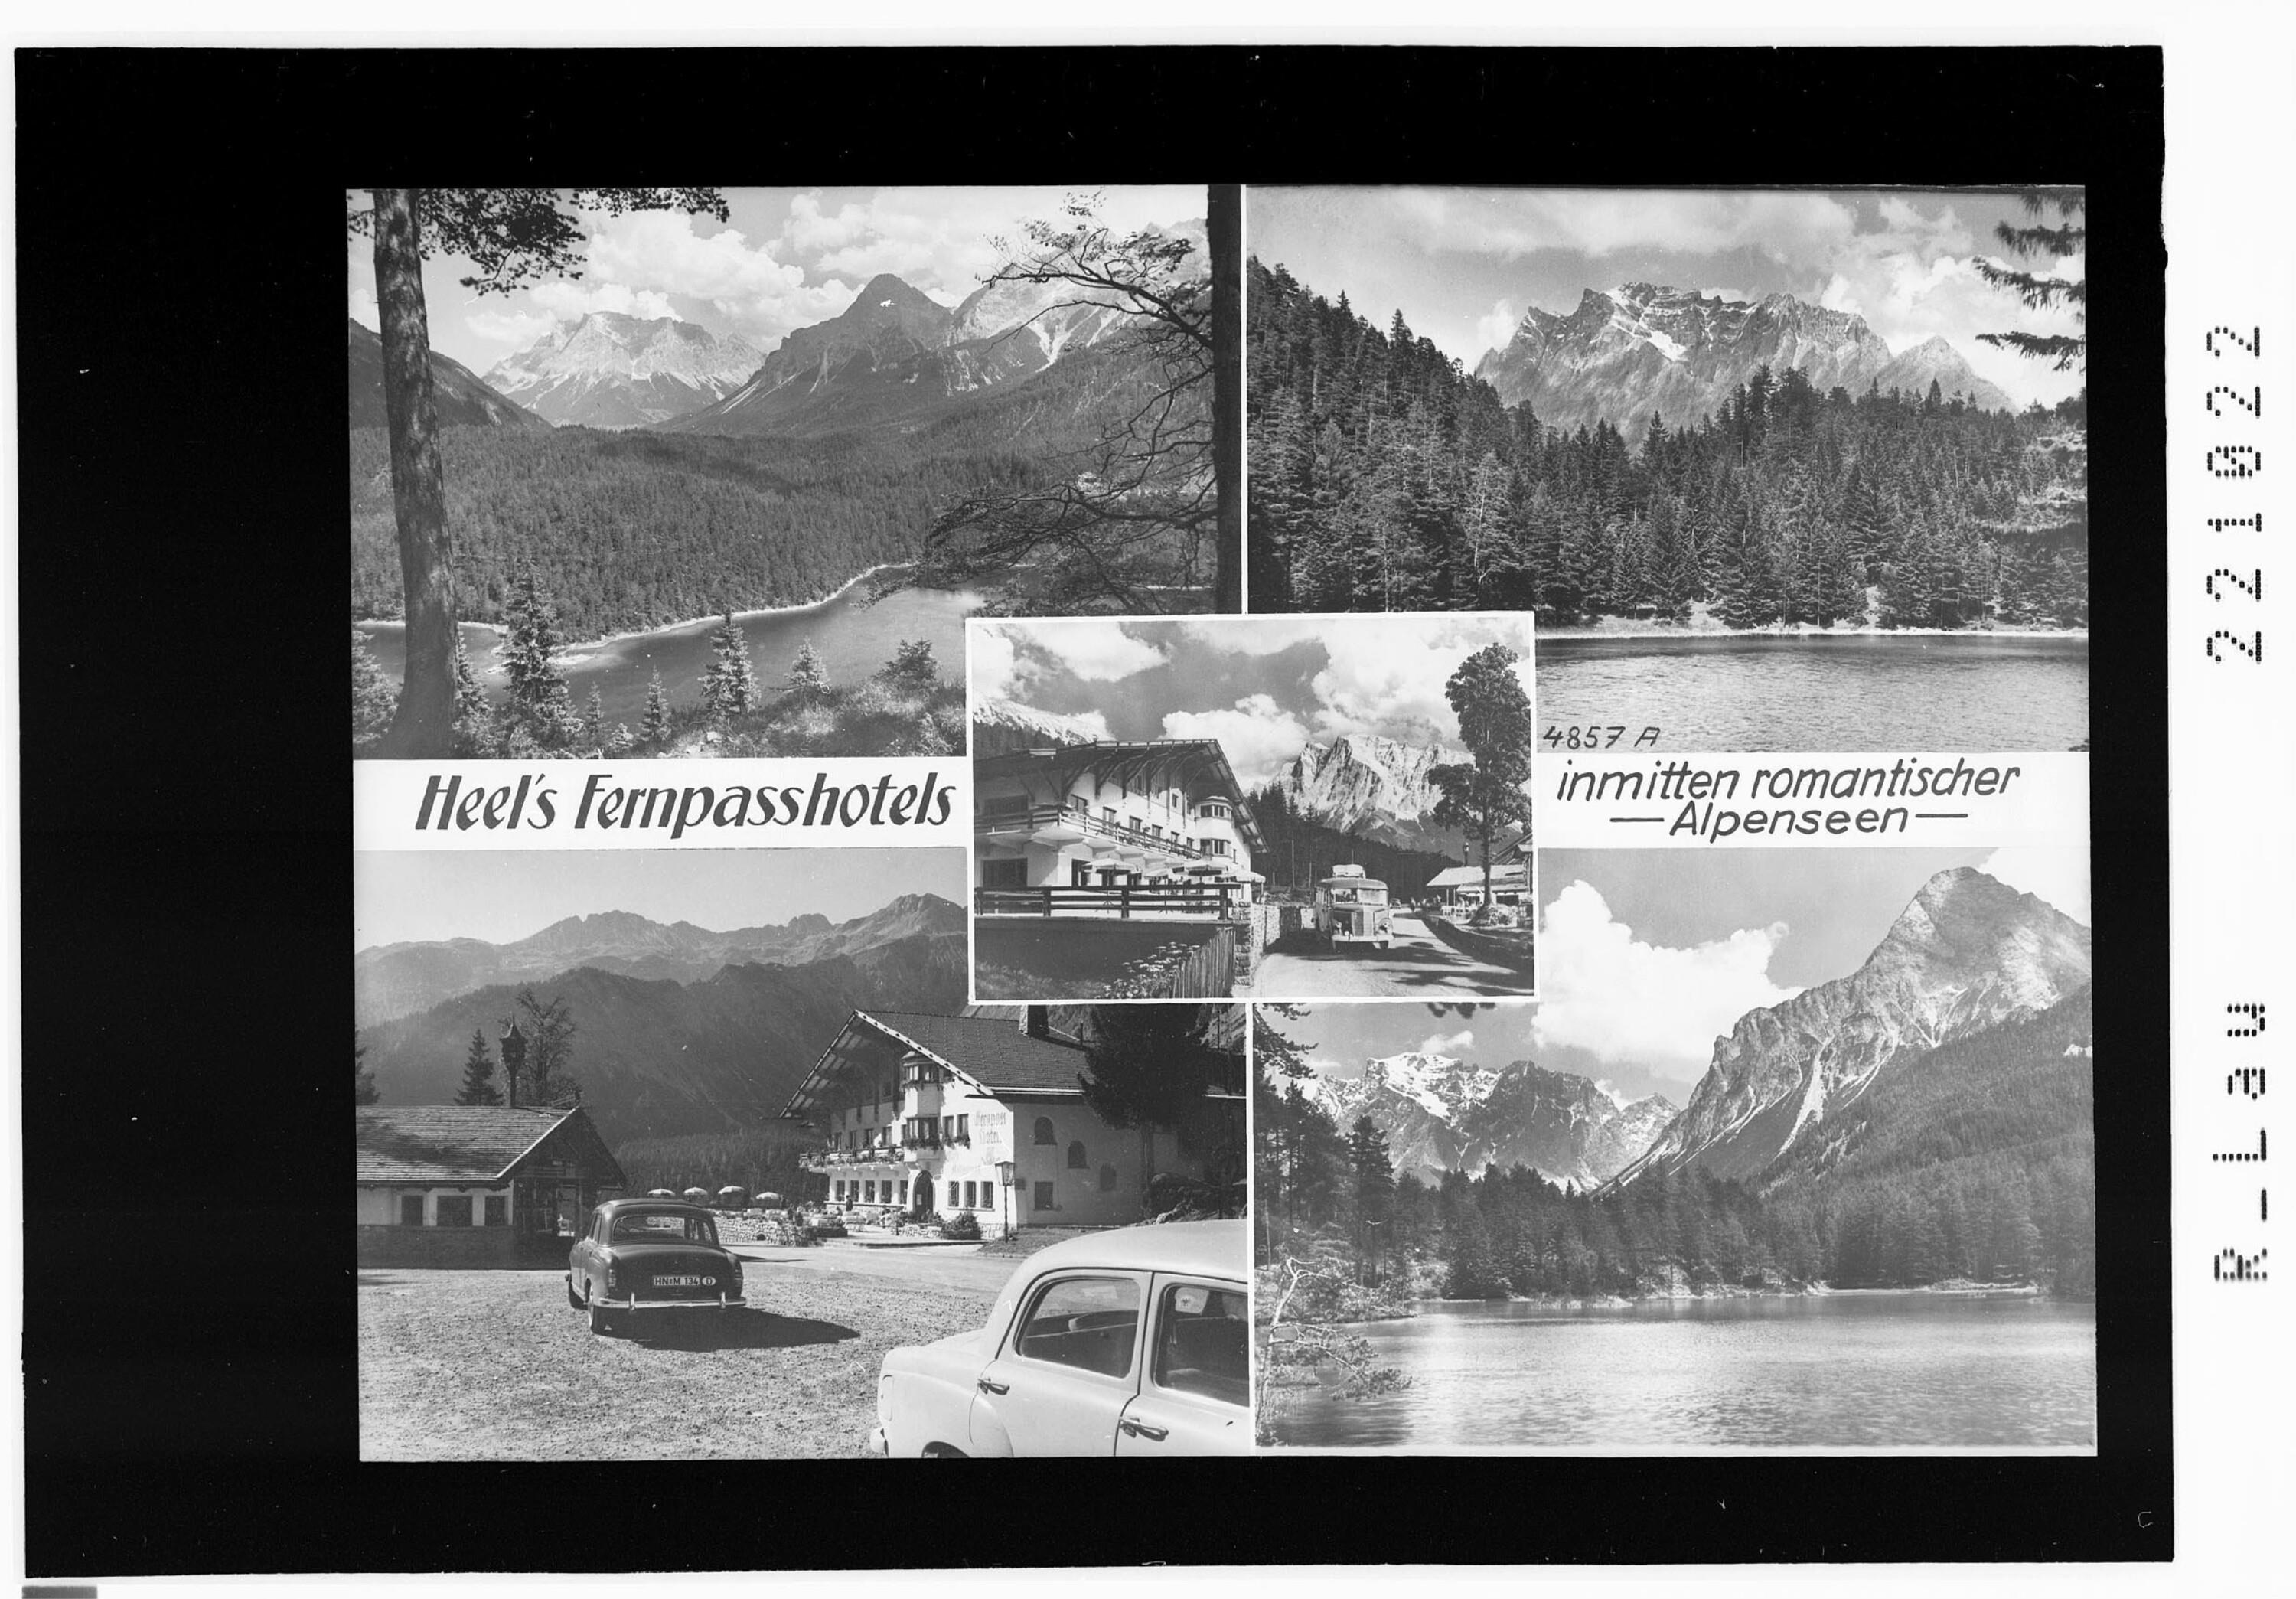 Heel's Fernpasshotel inmitten romantischer Alpenseen></div>


    <hr>
    <div class=